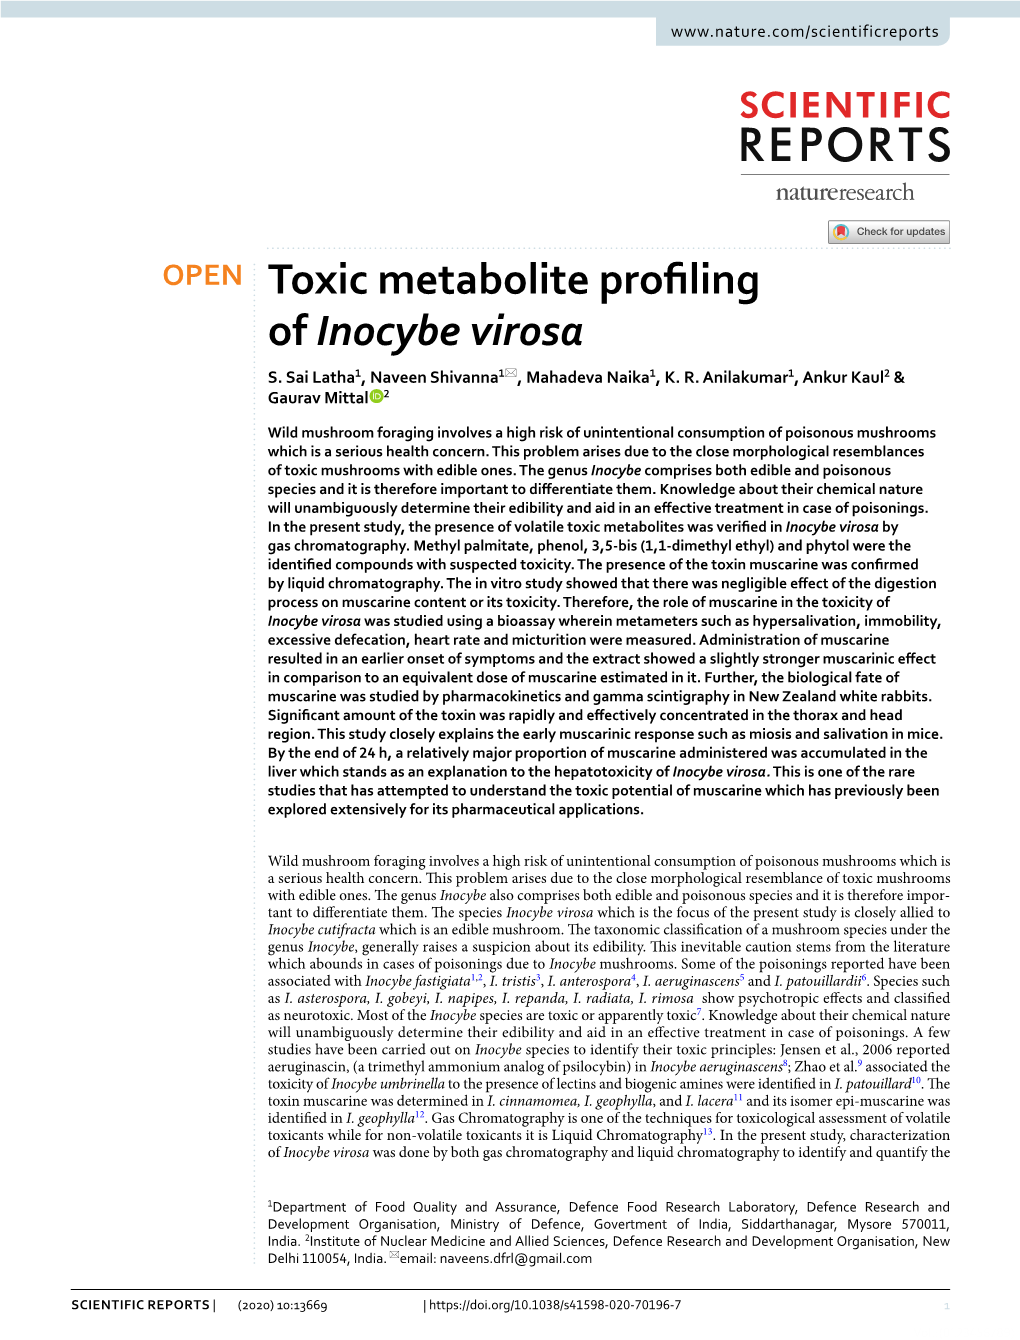 Toxic Metabolite Profiling of Inocybe Virosa